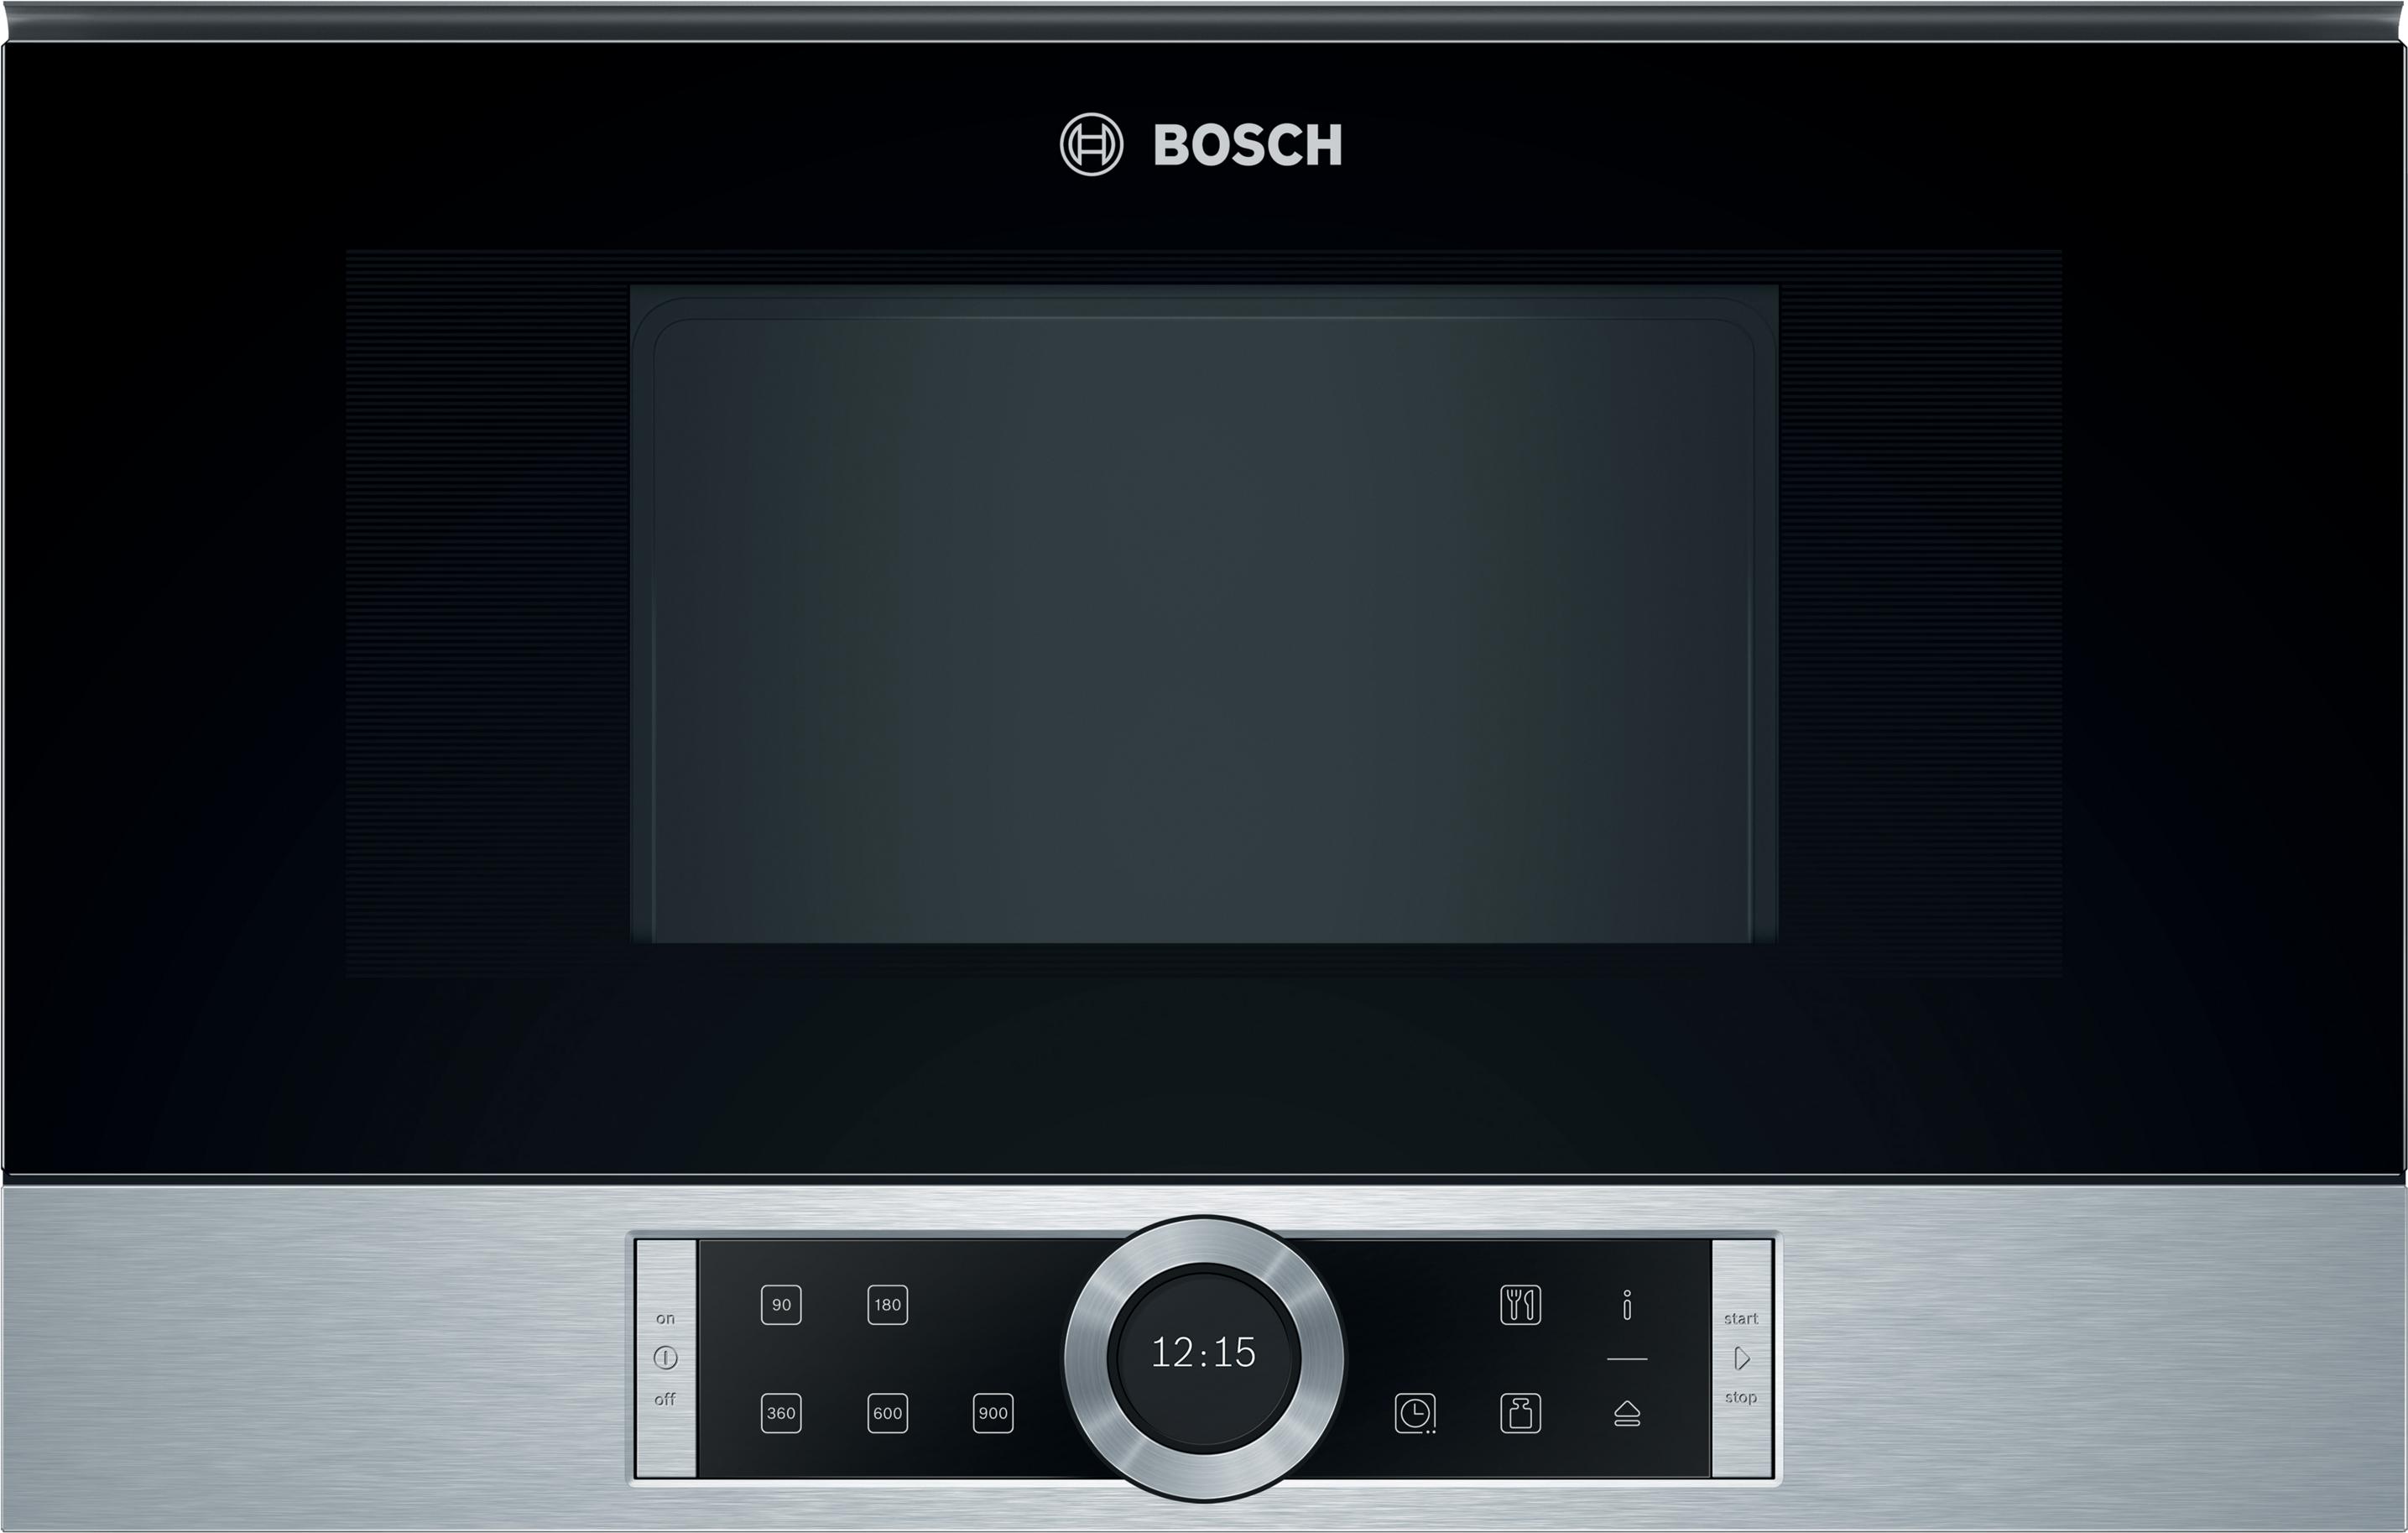 Bosch_BFL634GS1x1200x1200x4.jpg